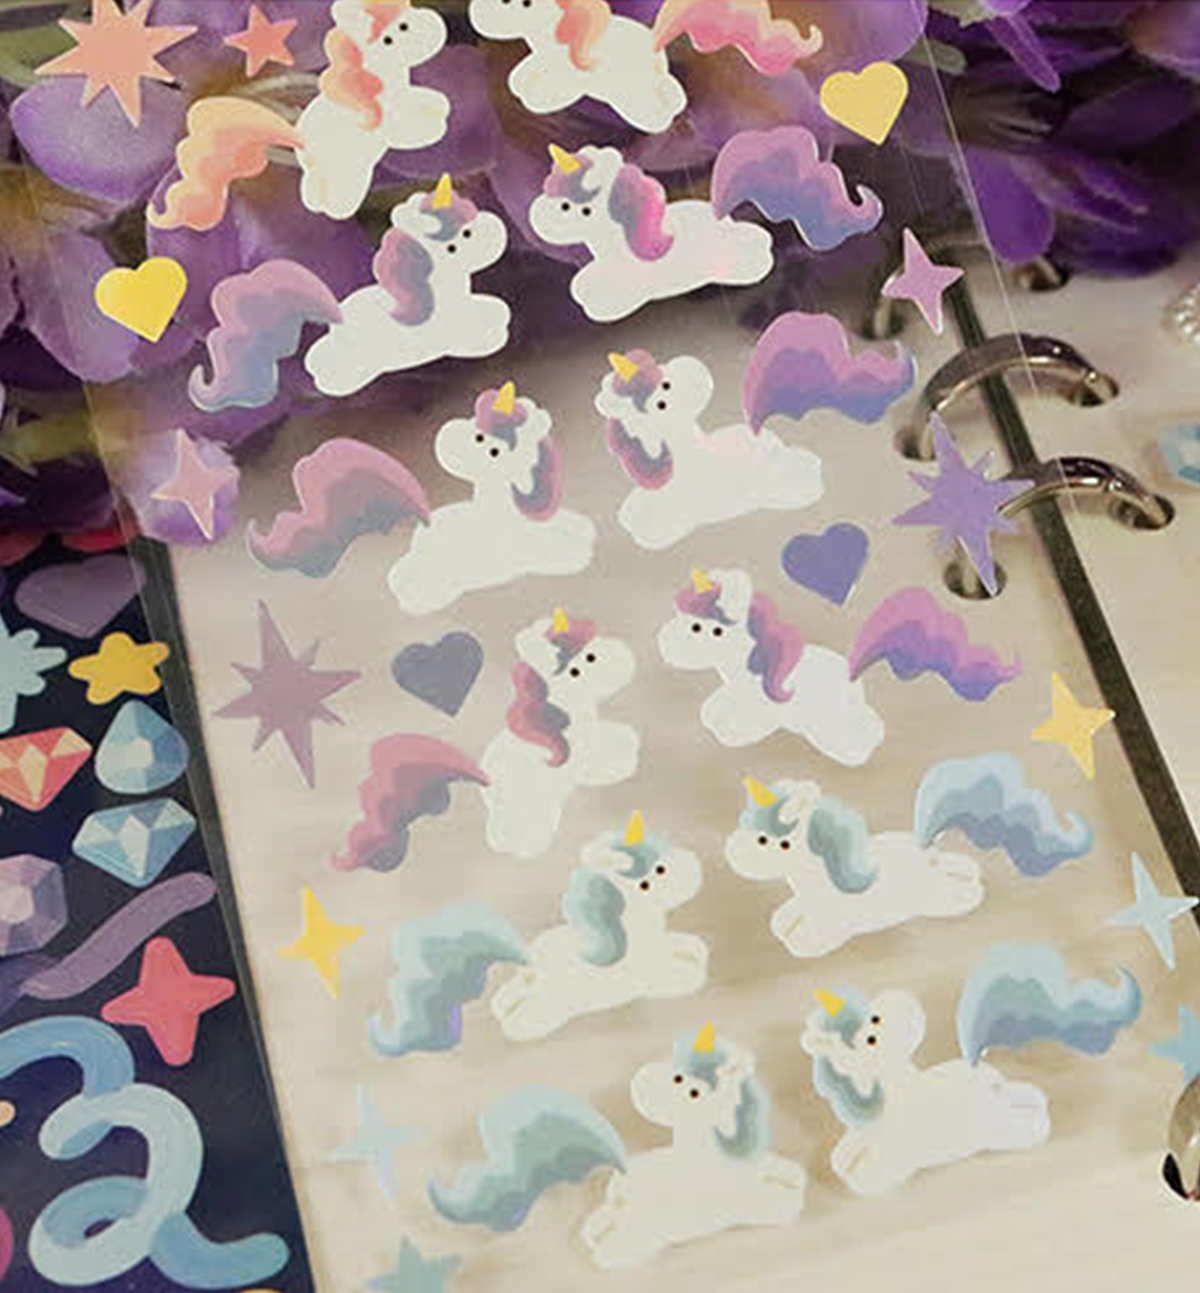 Lucky Unicorn & Jewel Confetti Seal Sticker